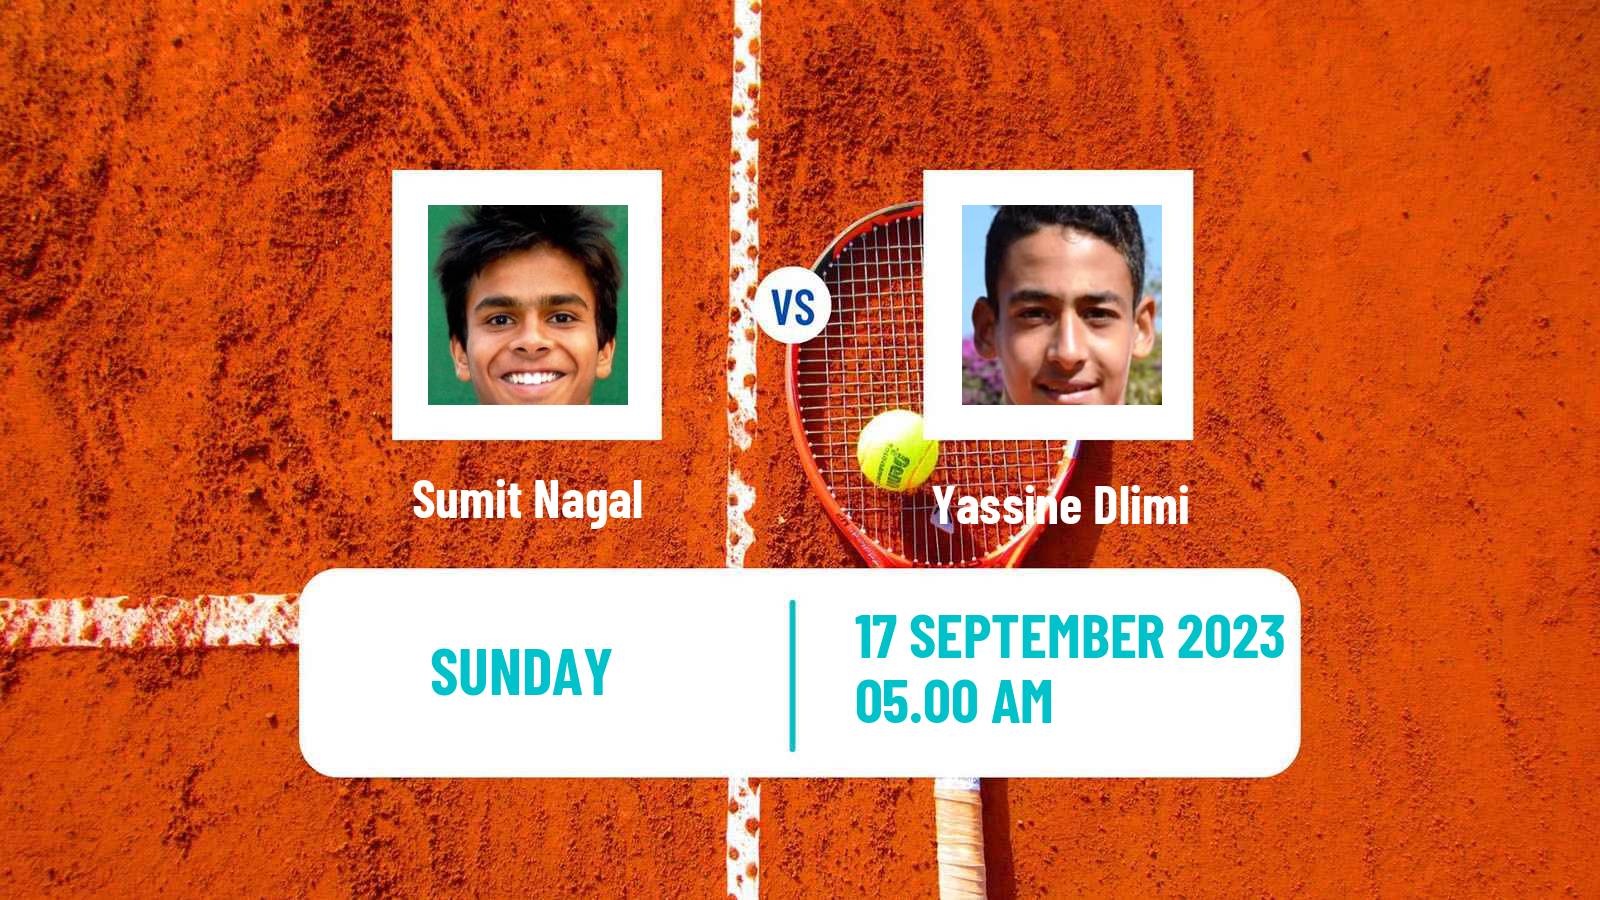 Tennis Davis Cup World Group II Sumit Nagal - Yassine Dlimi